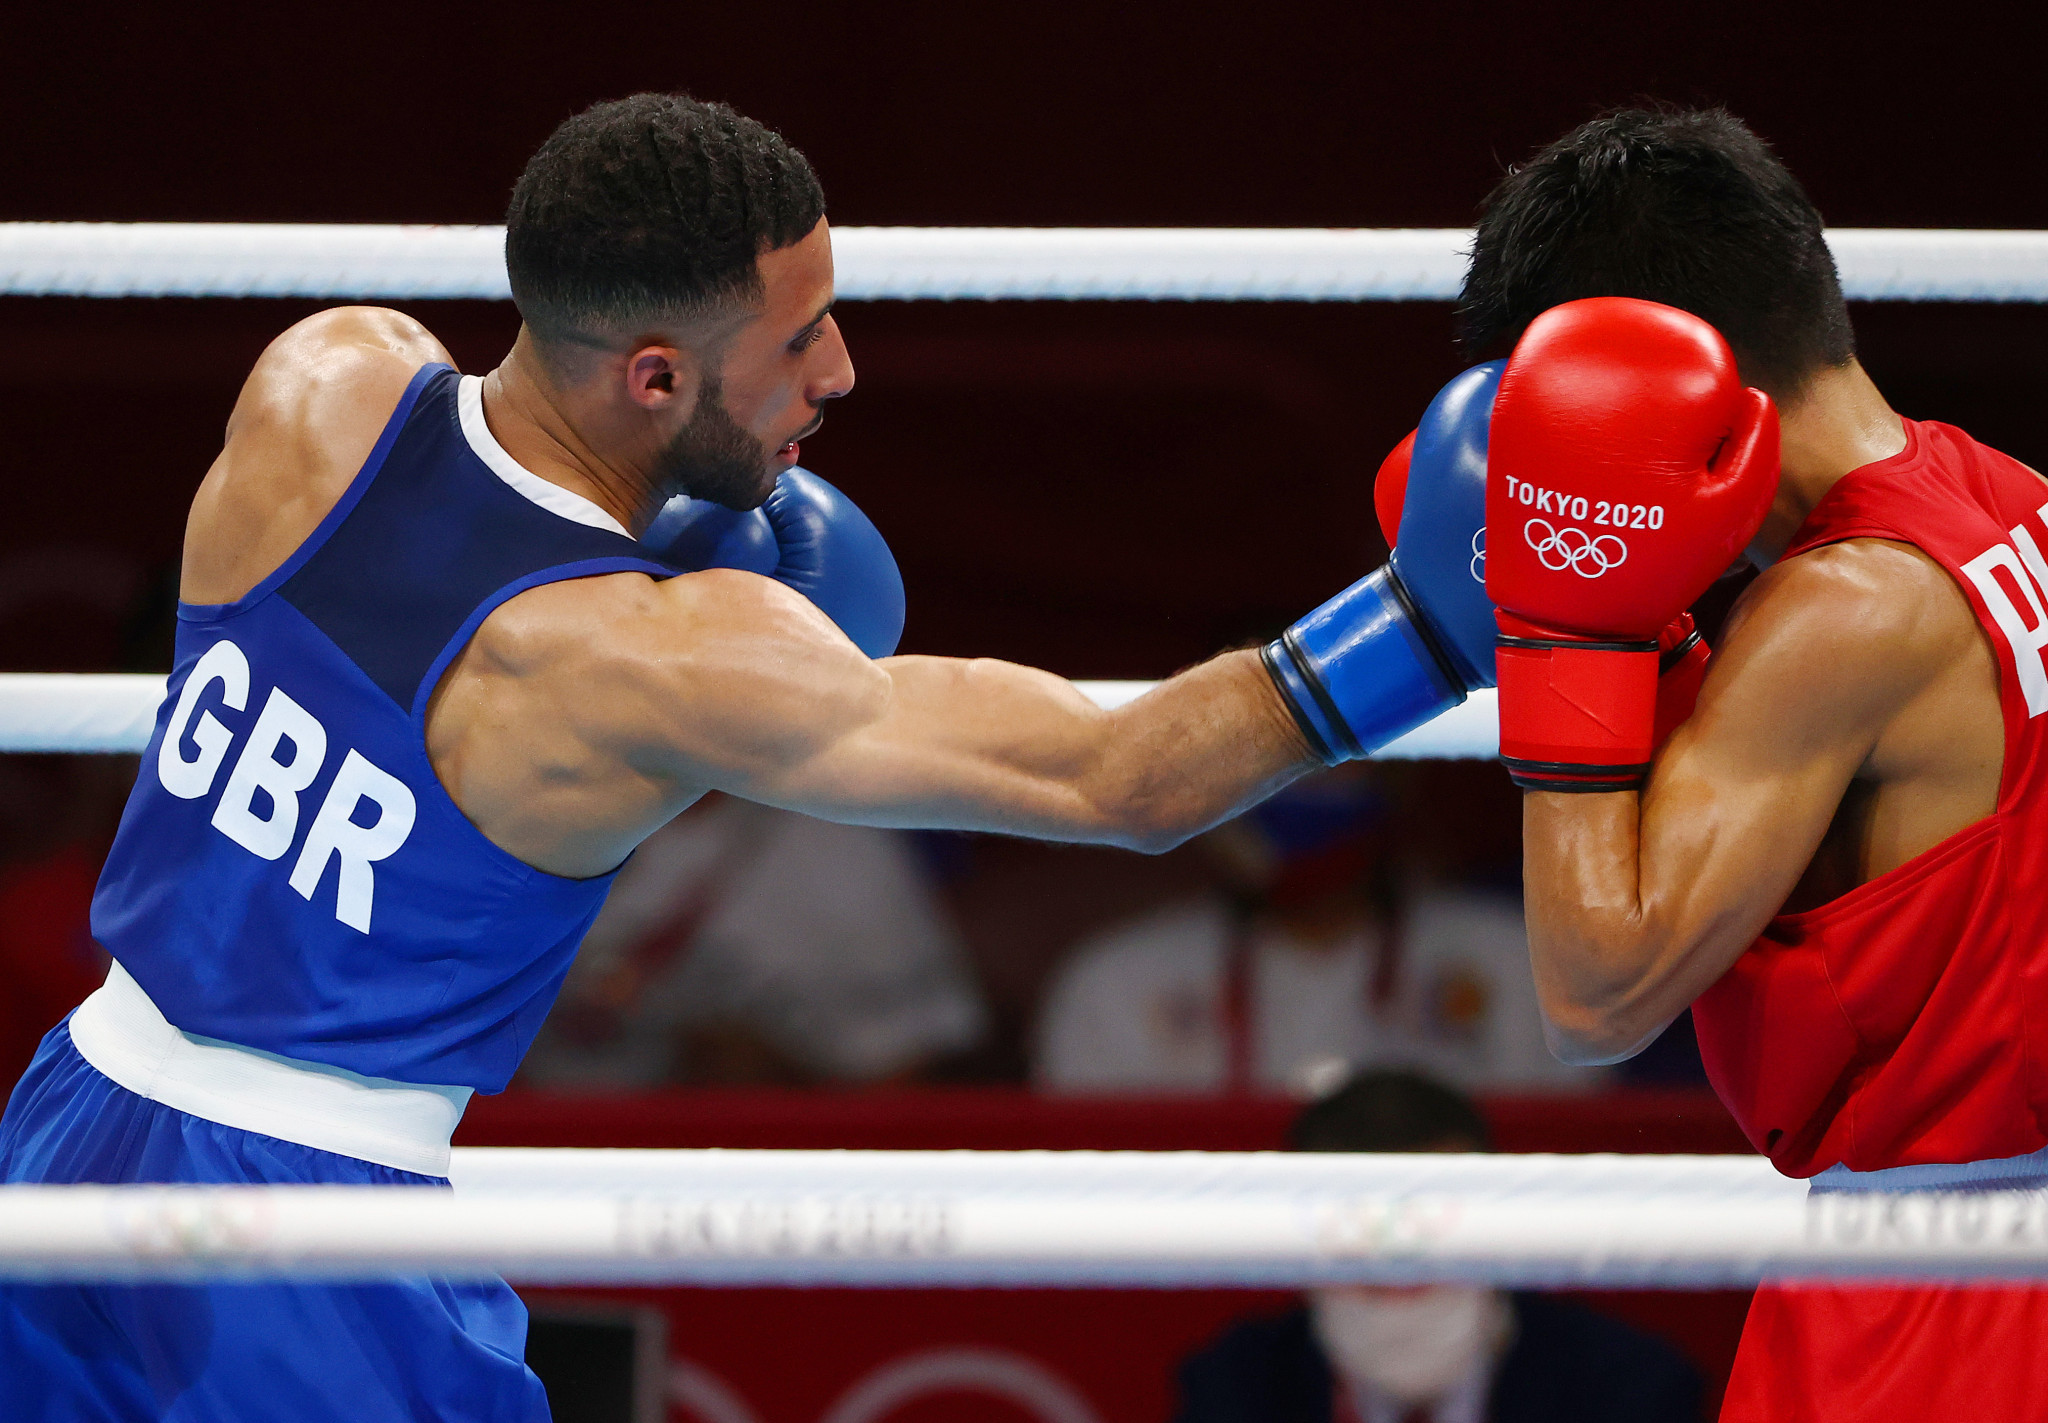 GB Boxing extends boycott to IBA Men's World Championships in Tashkent